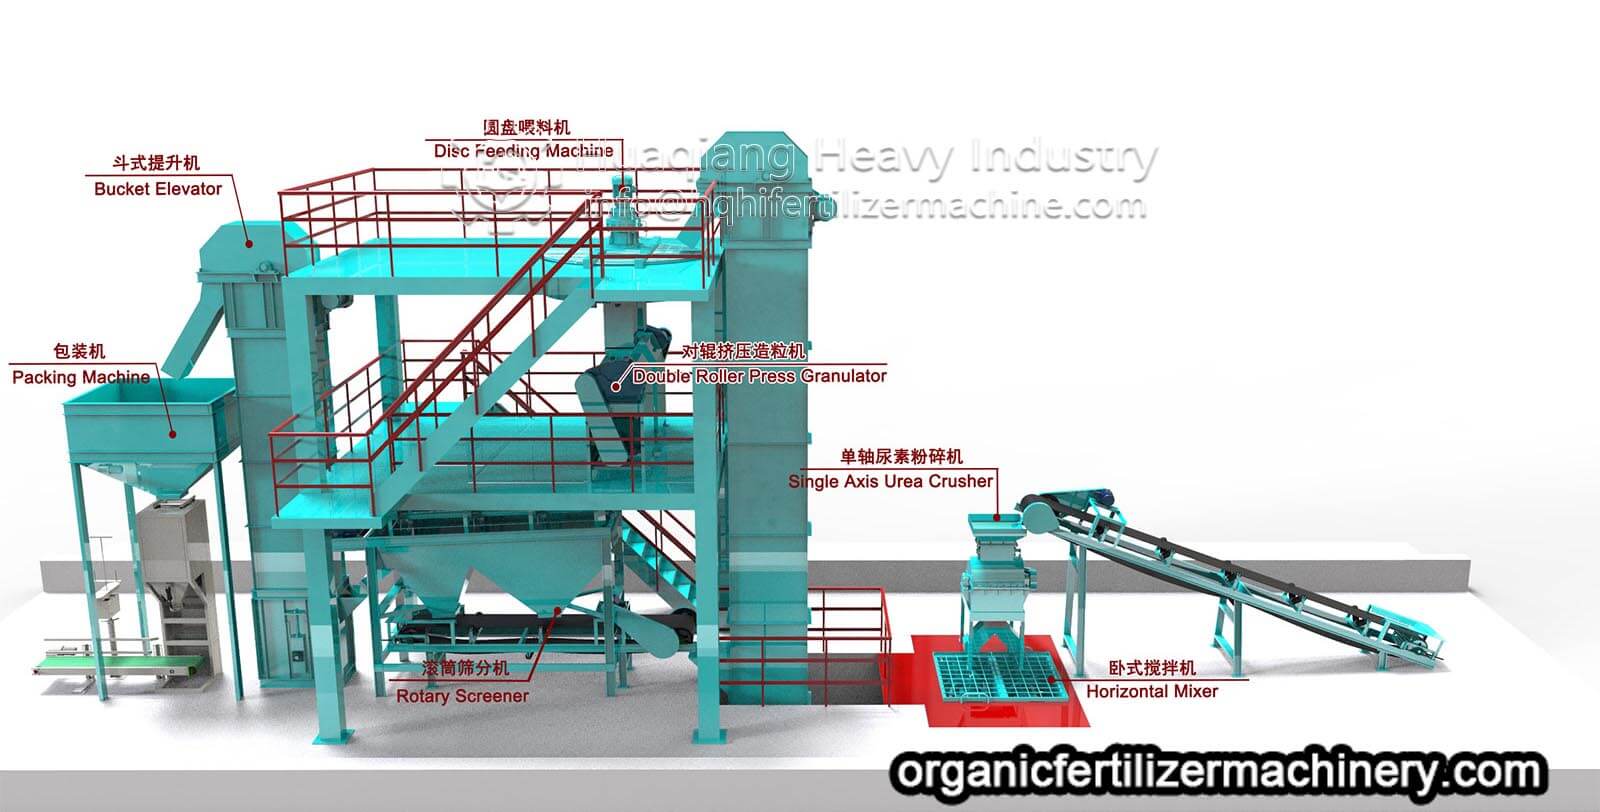 Disadvantages of compound fertilizer production by double roller granulator